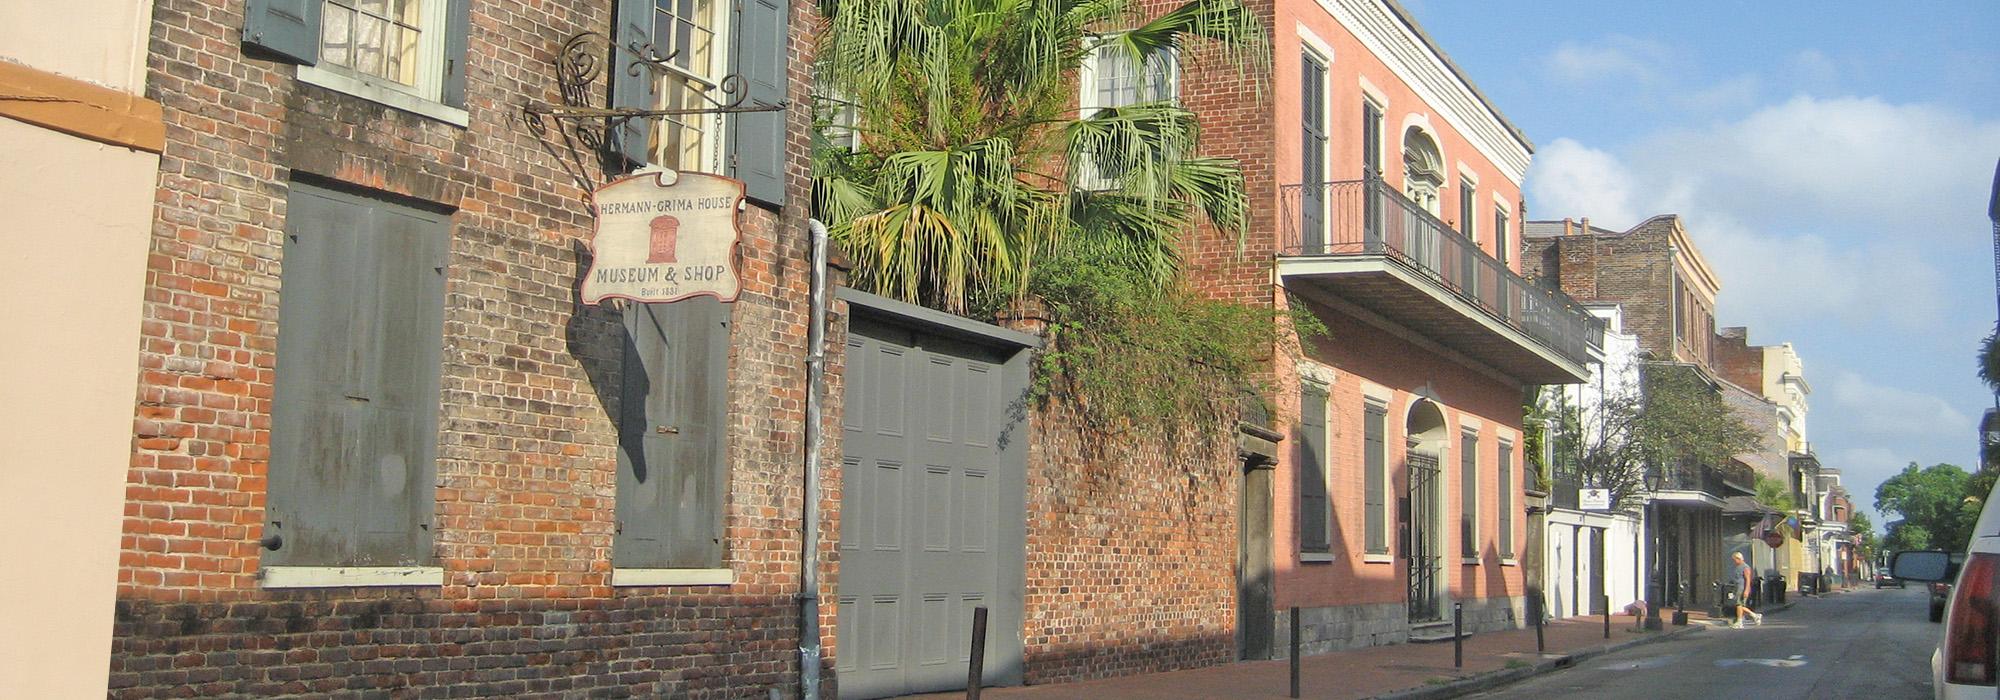 Hermann-Grima House, New Orleans, LA